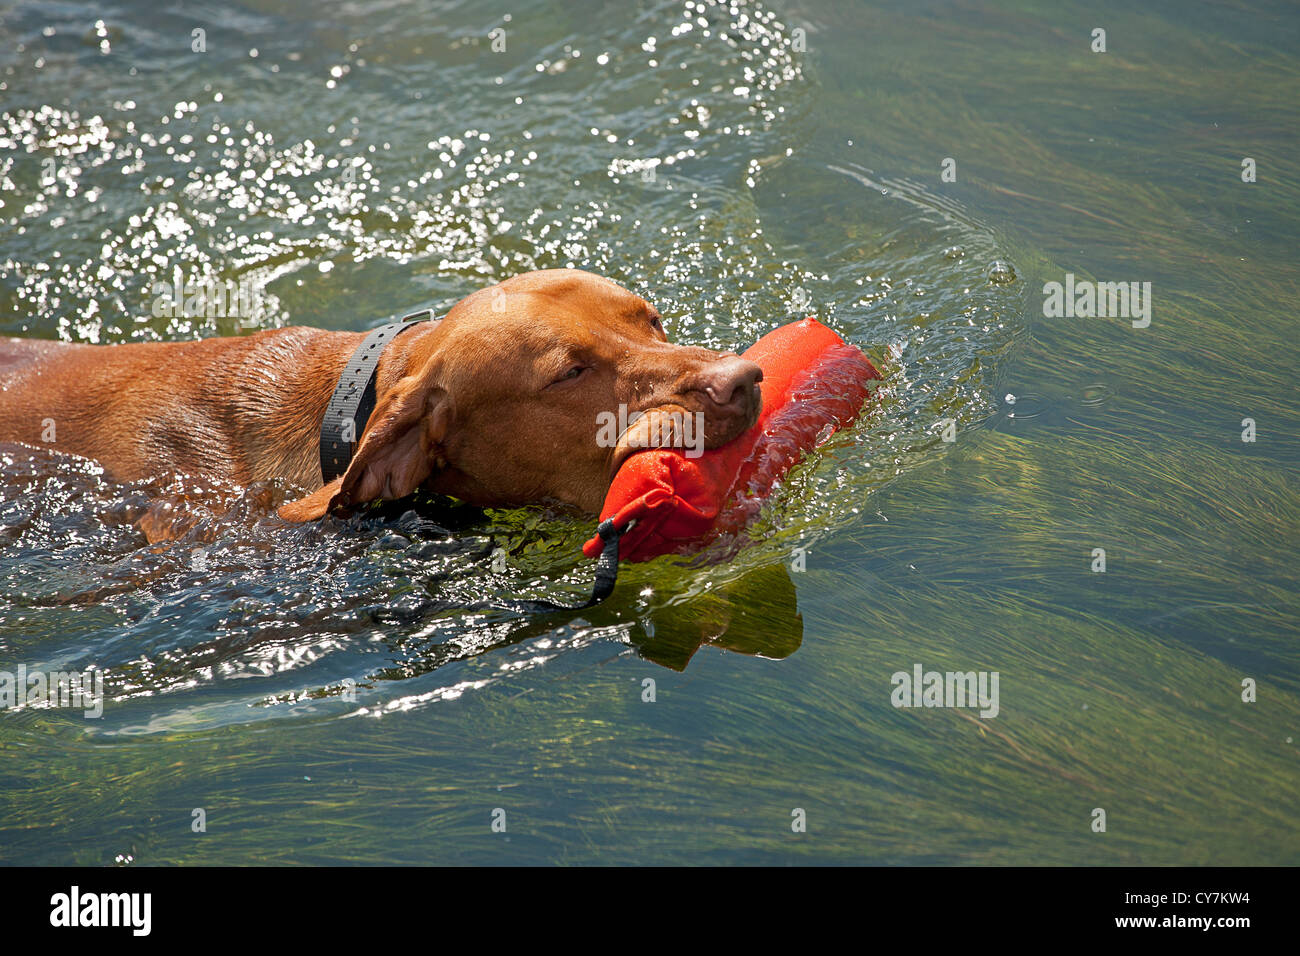 Hungarian vizsla hunting dog retrieving dummy from water Stock Photo